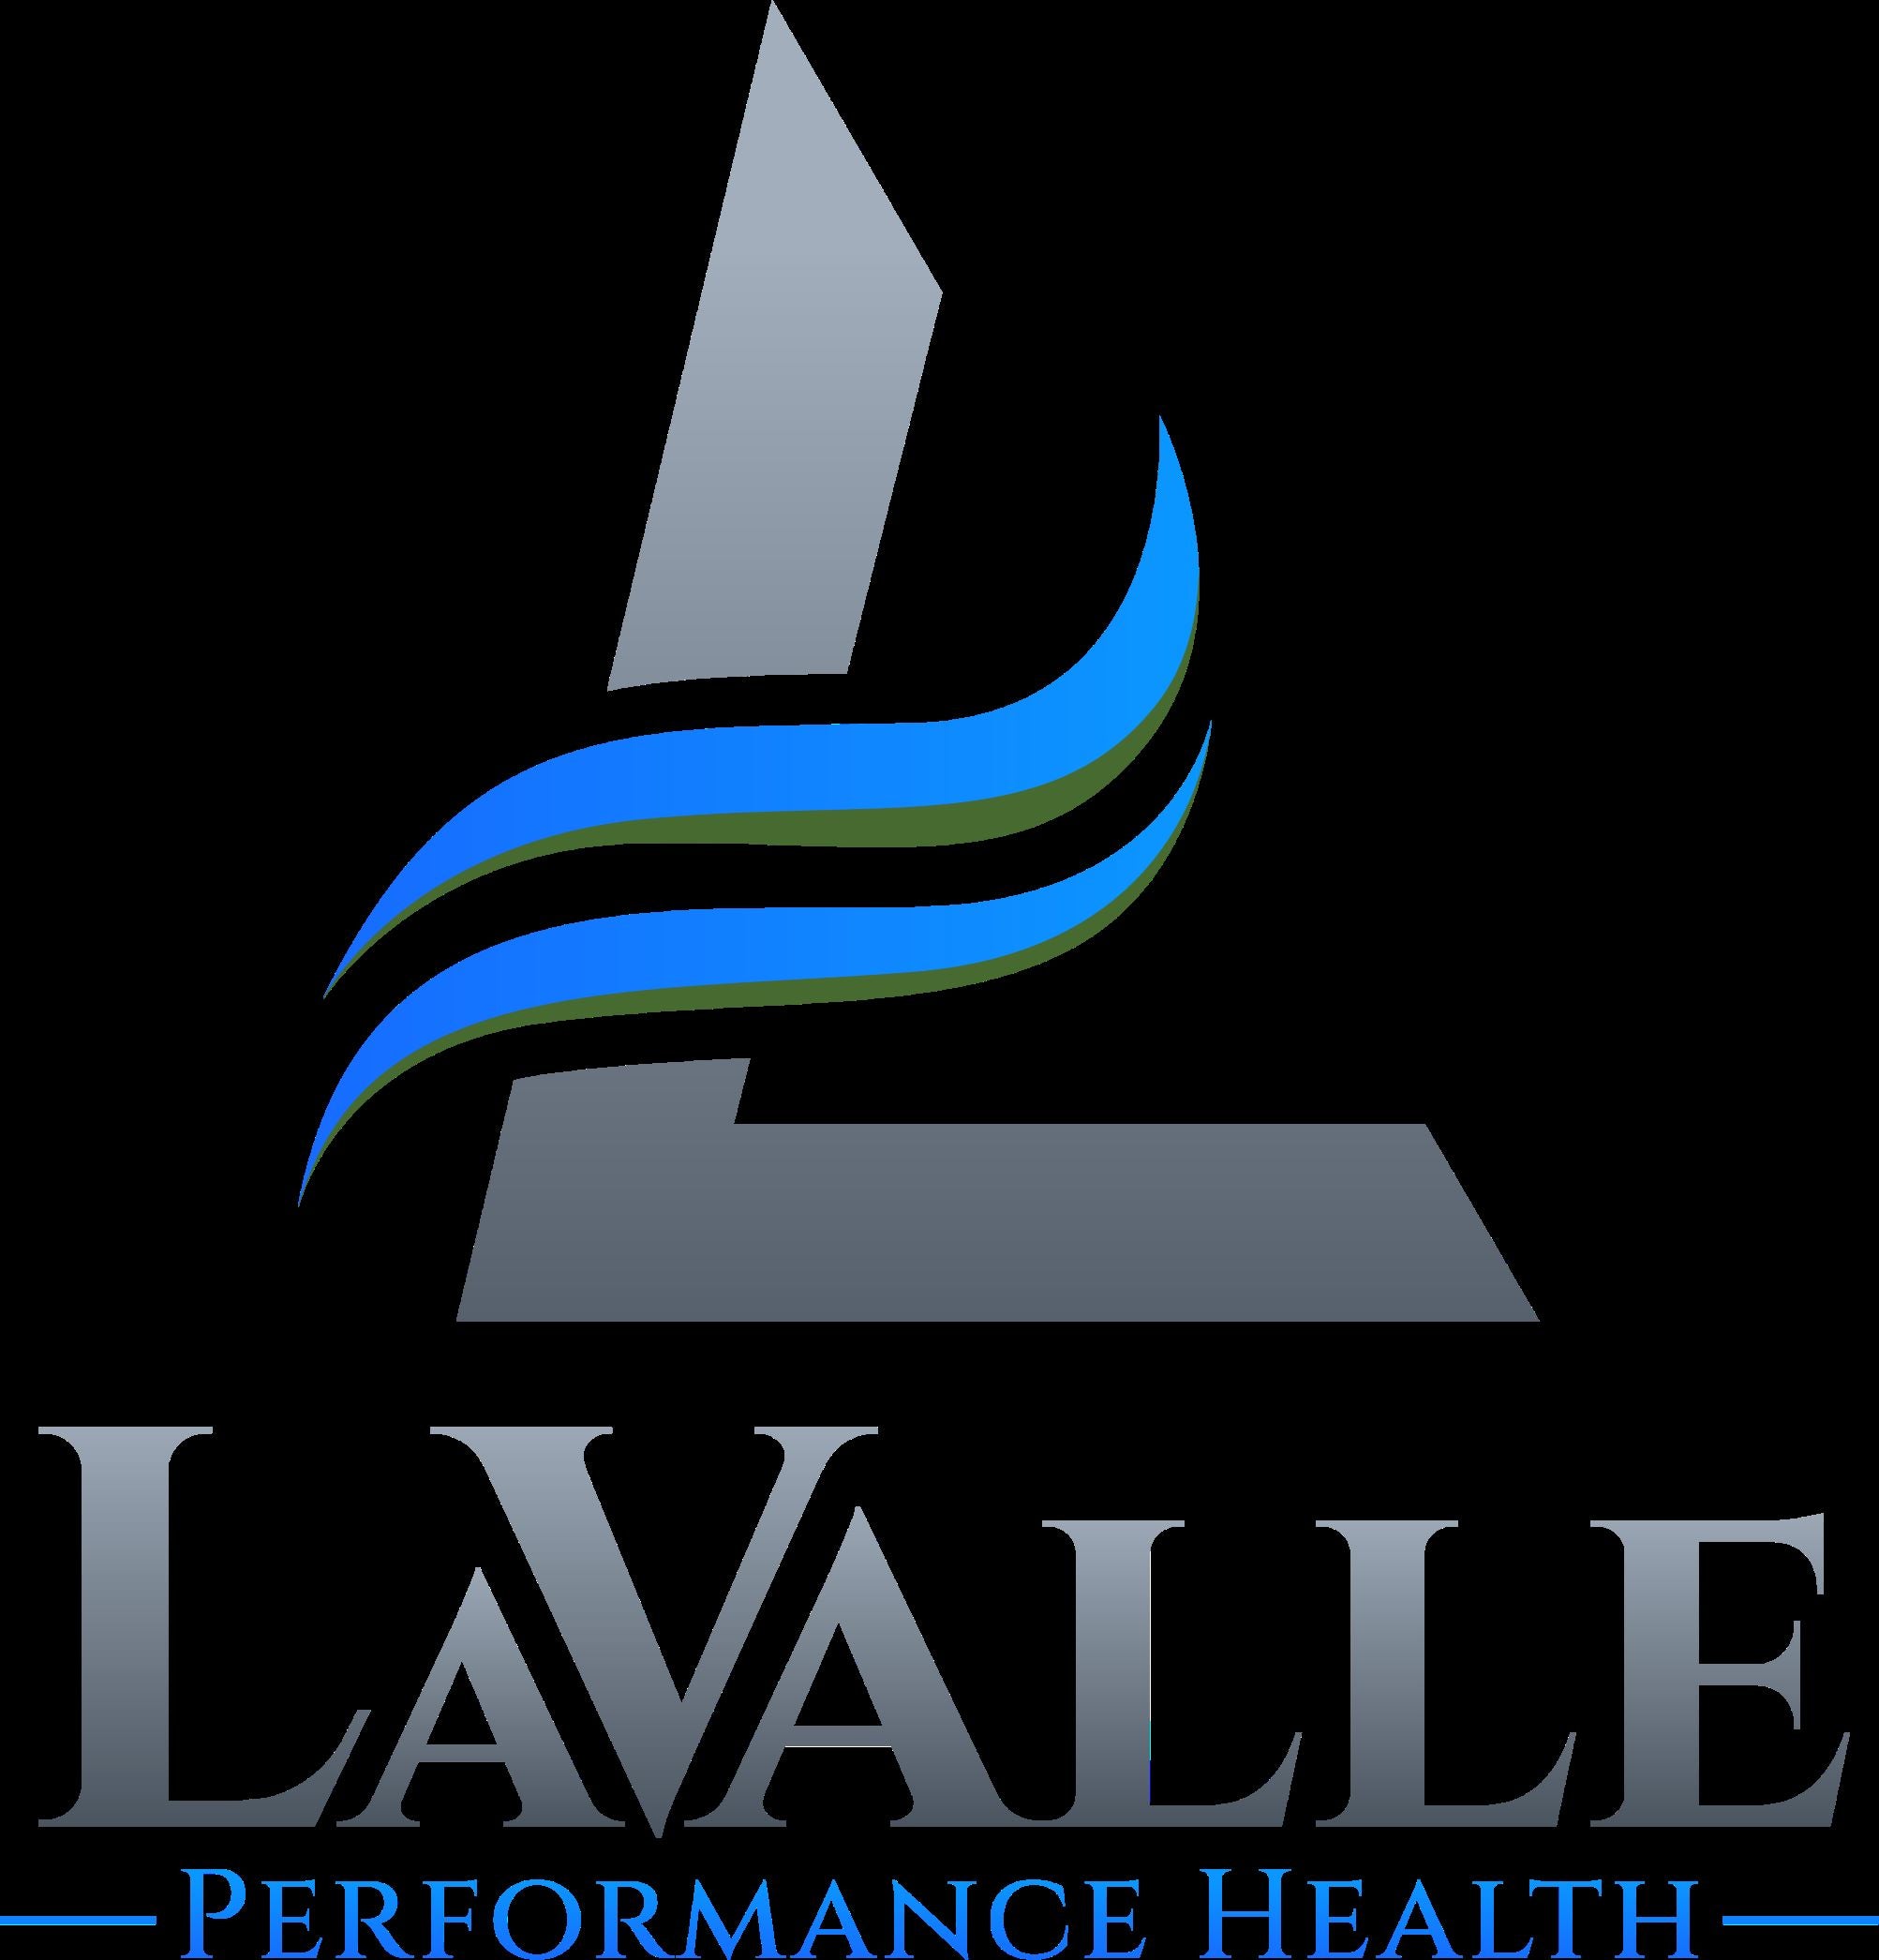 LaValle Performance Health